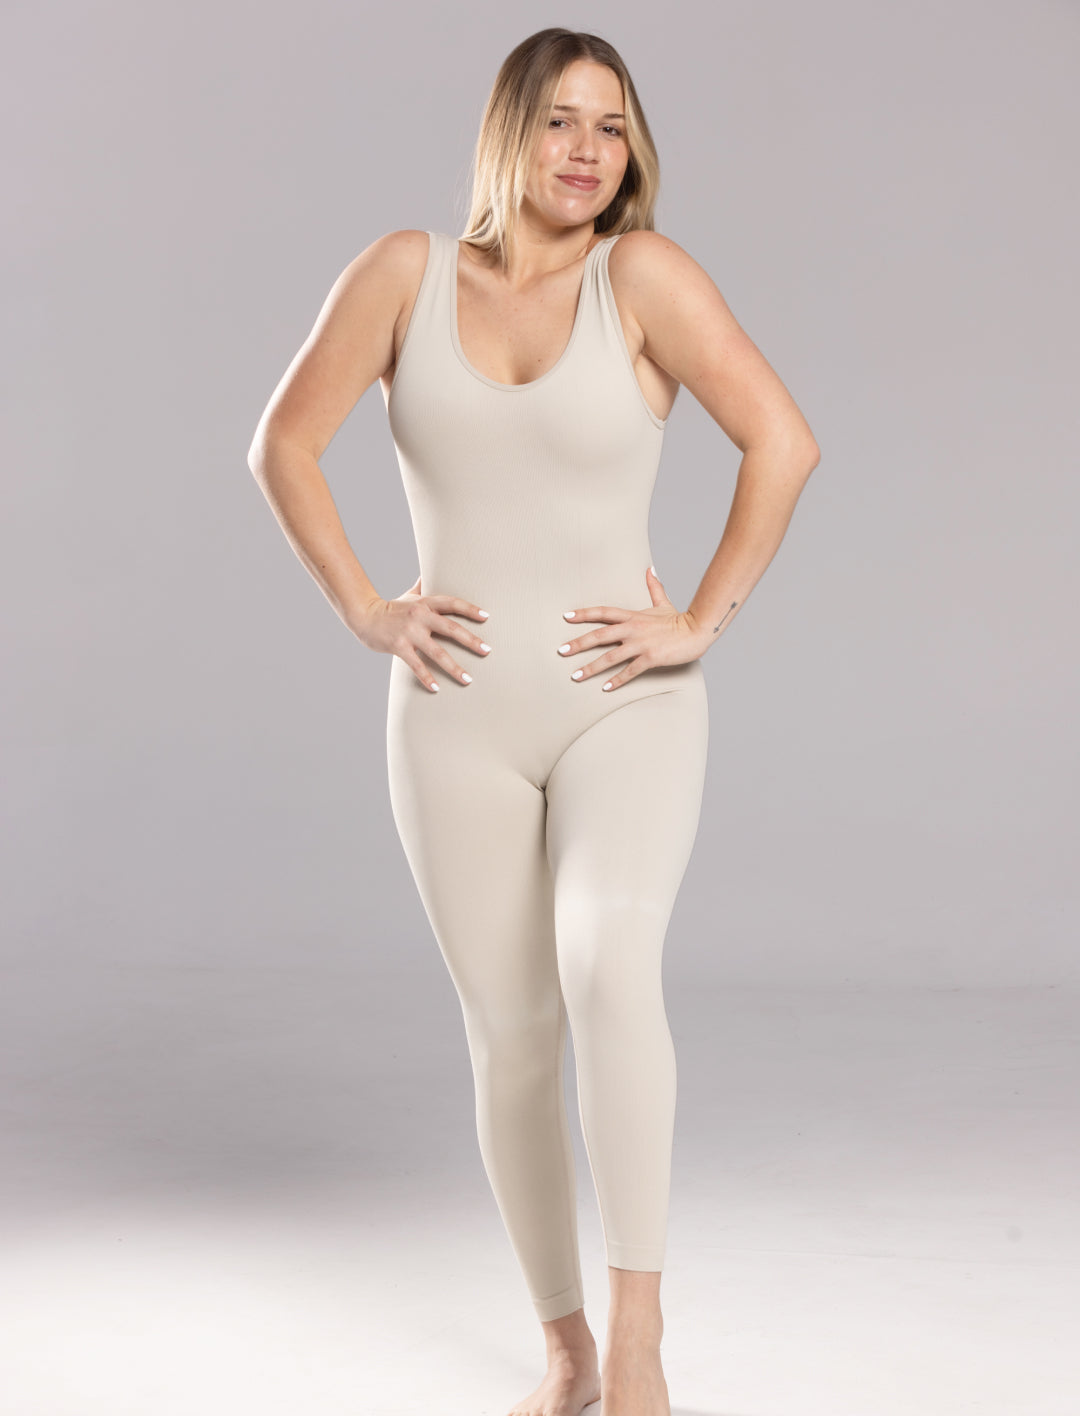  Eixyhueg Womens Sleeveless Body Sculpting Jumpsuit